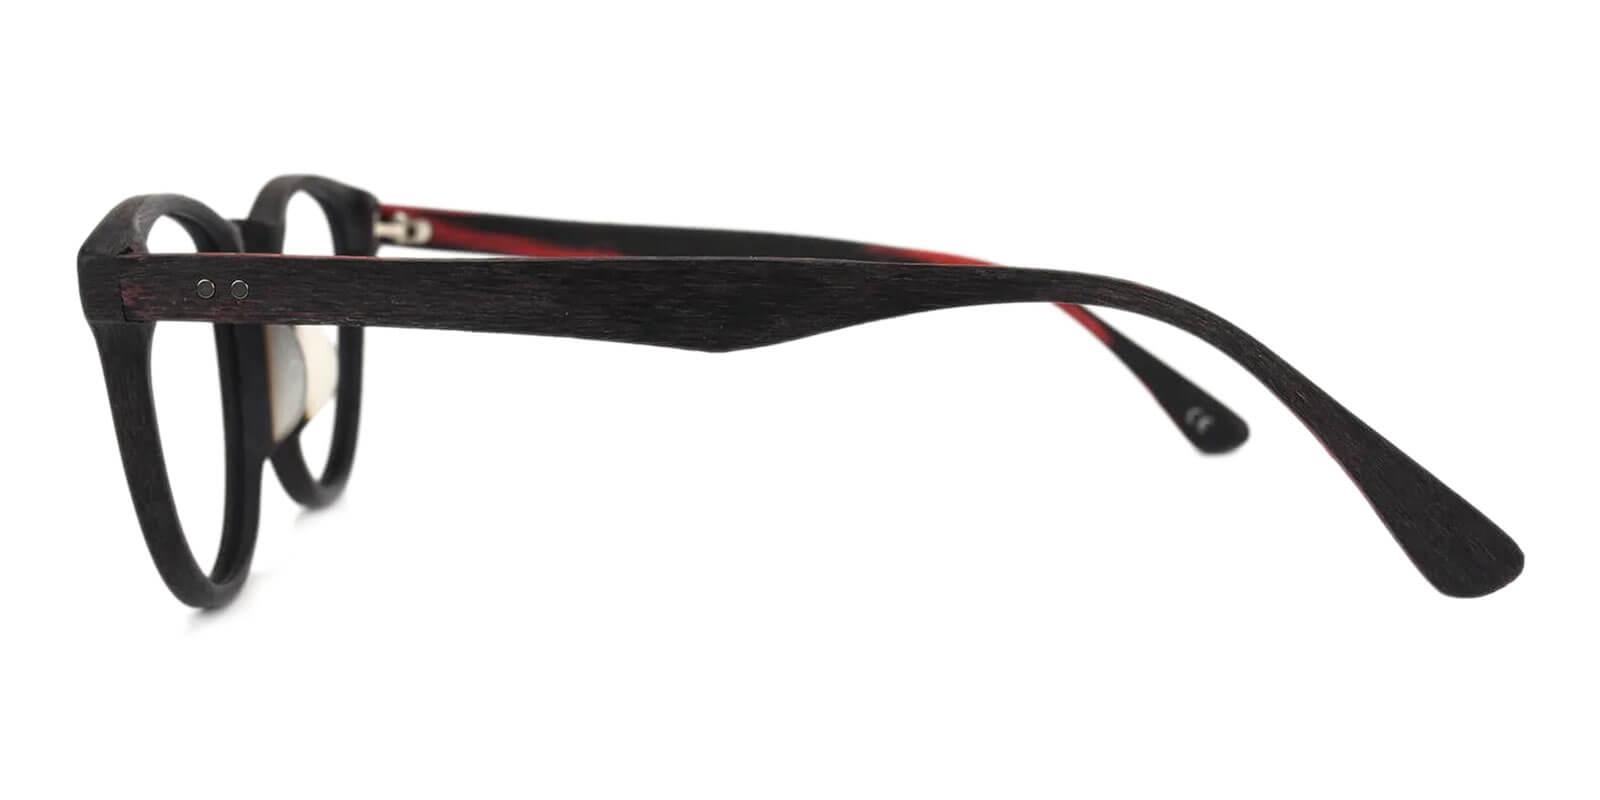 Pacific Red TR Eyeglasses , UniversalBridgeFit Frames from ABBE Glasses